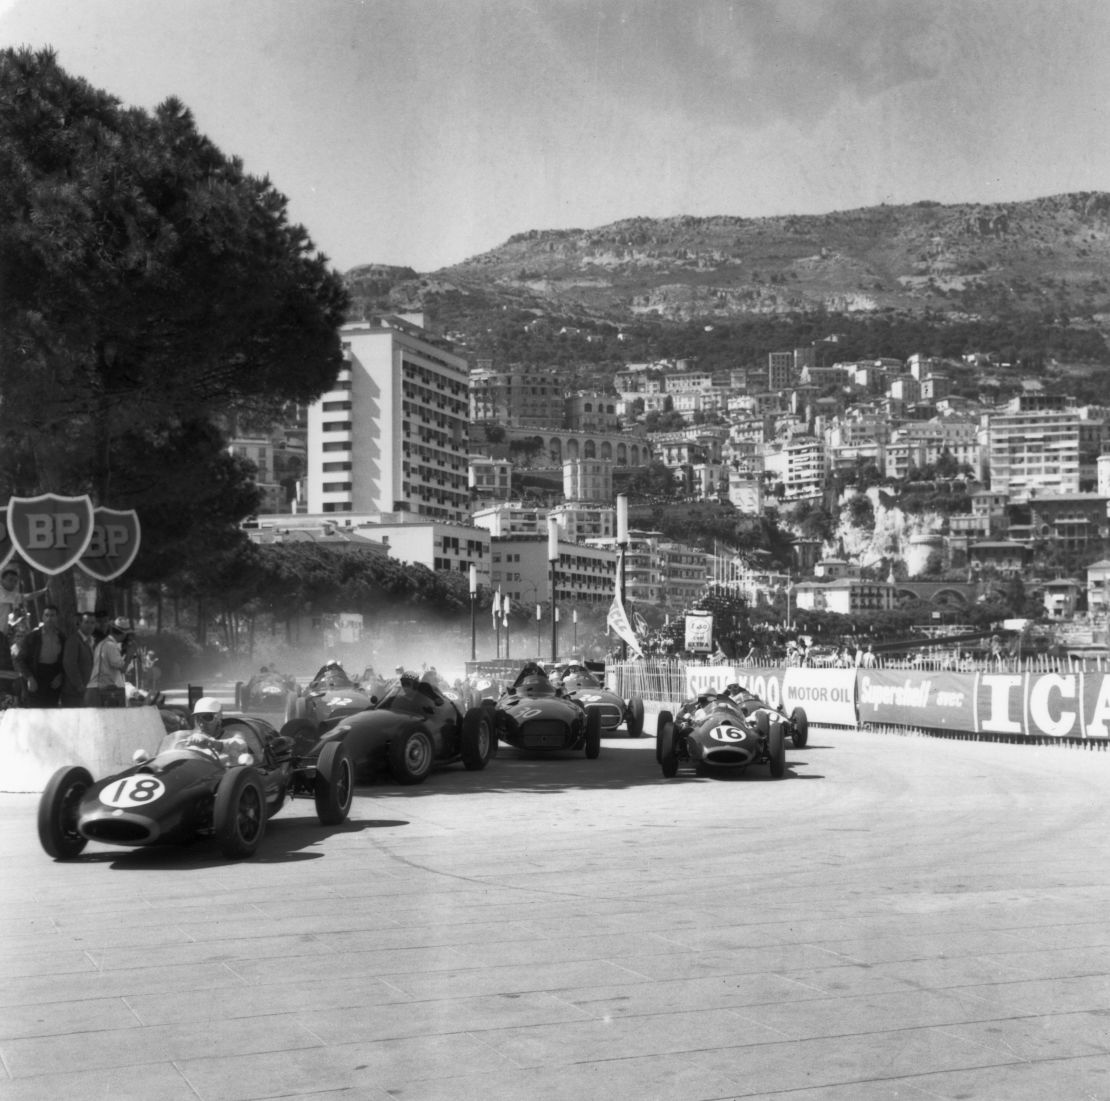 Cars competing at the 1958 Monaco Grand Prix.